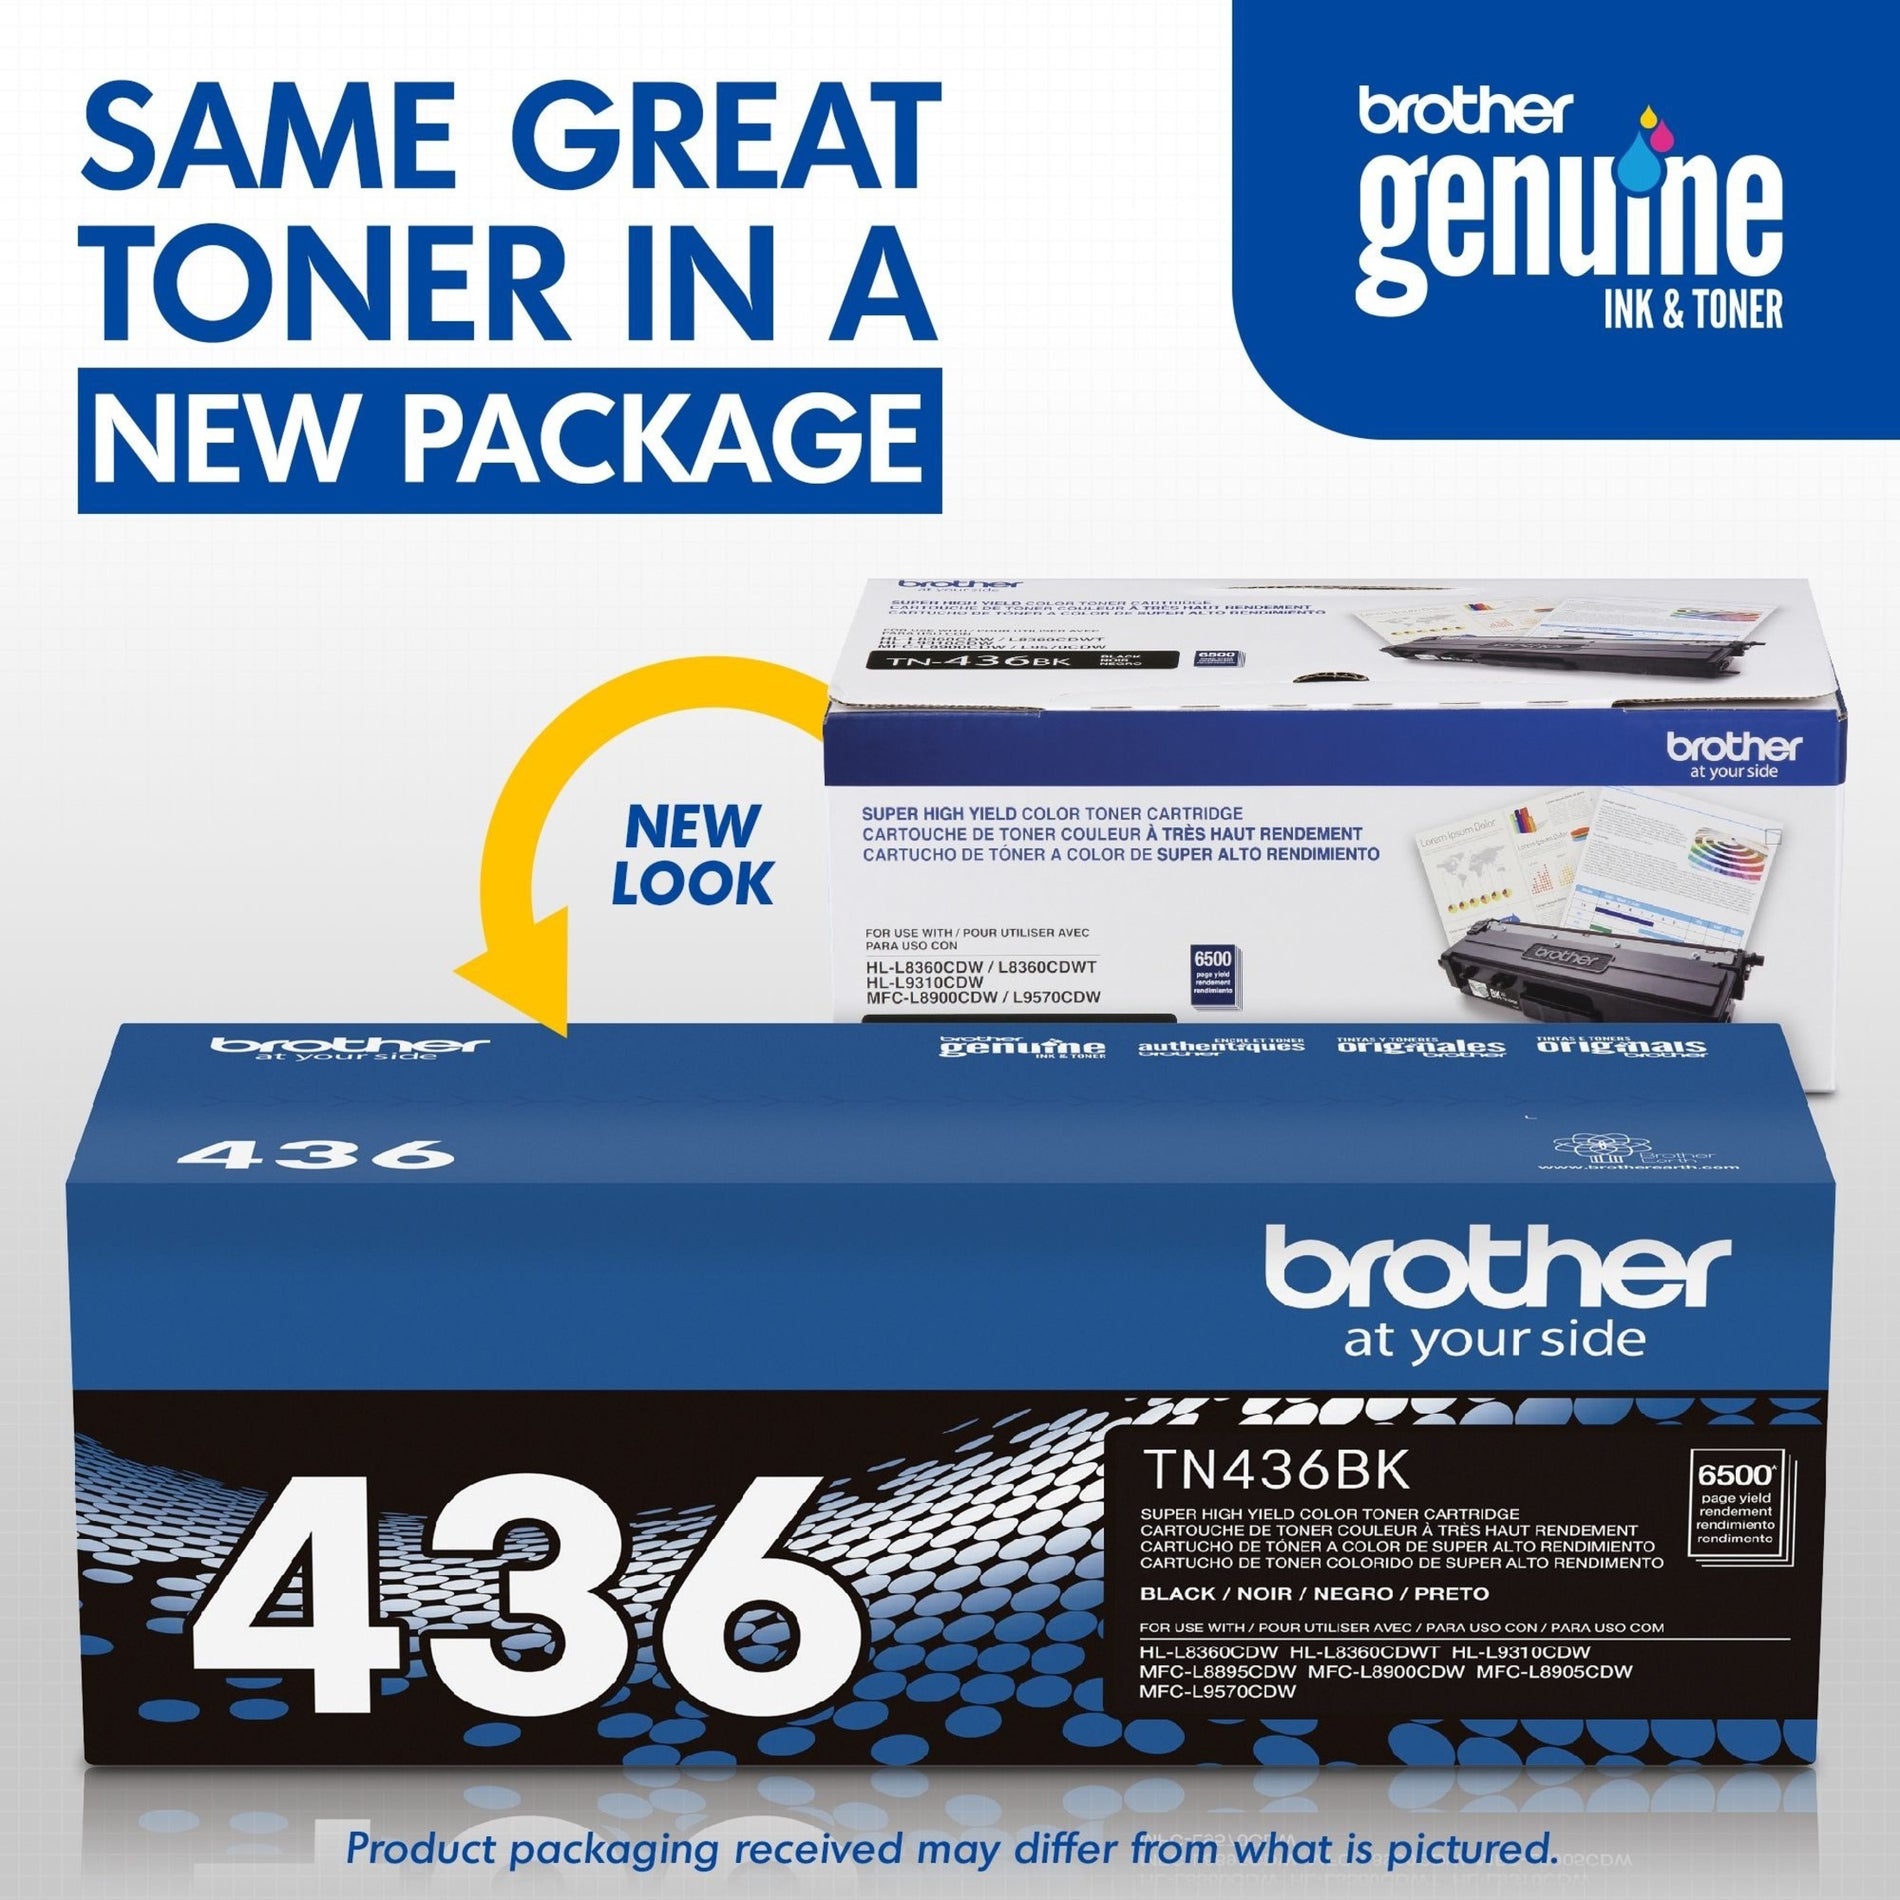 Brother TN436BK Toner Cartridge - Black, Original Laser Toner Cartridge - 6500 Pages